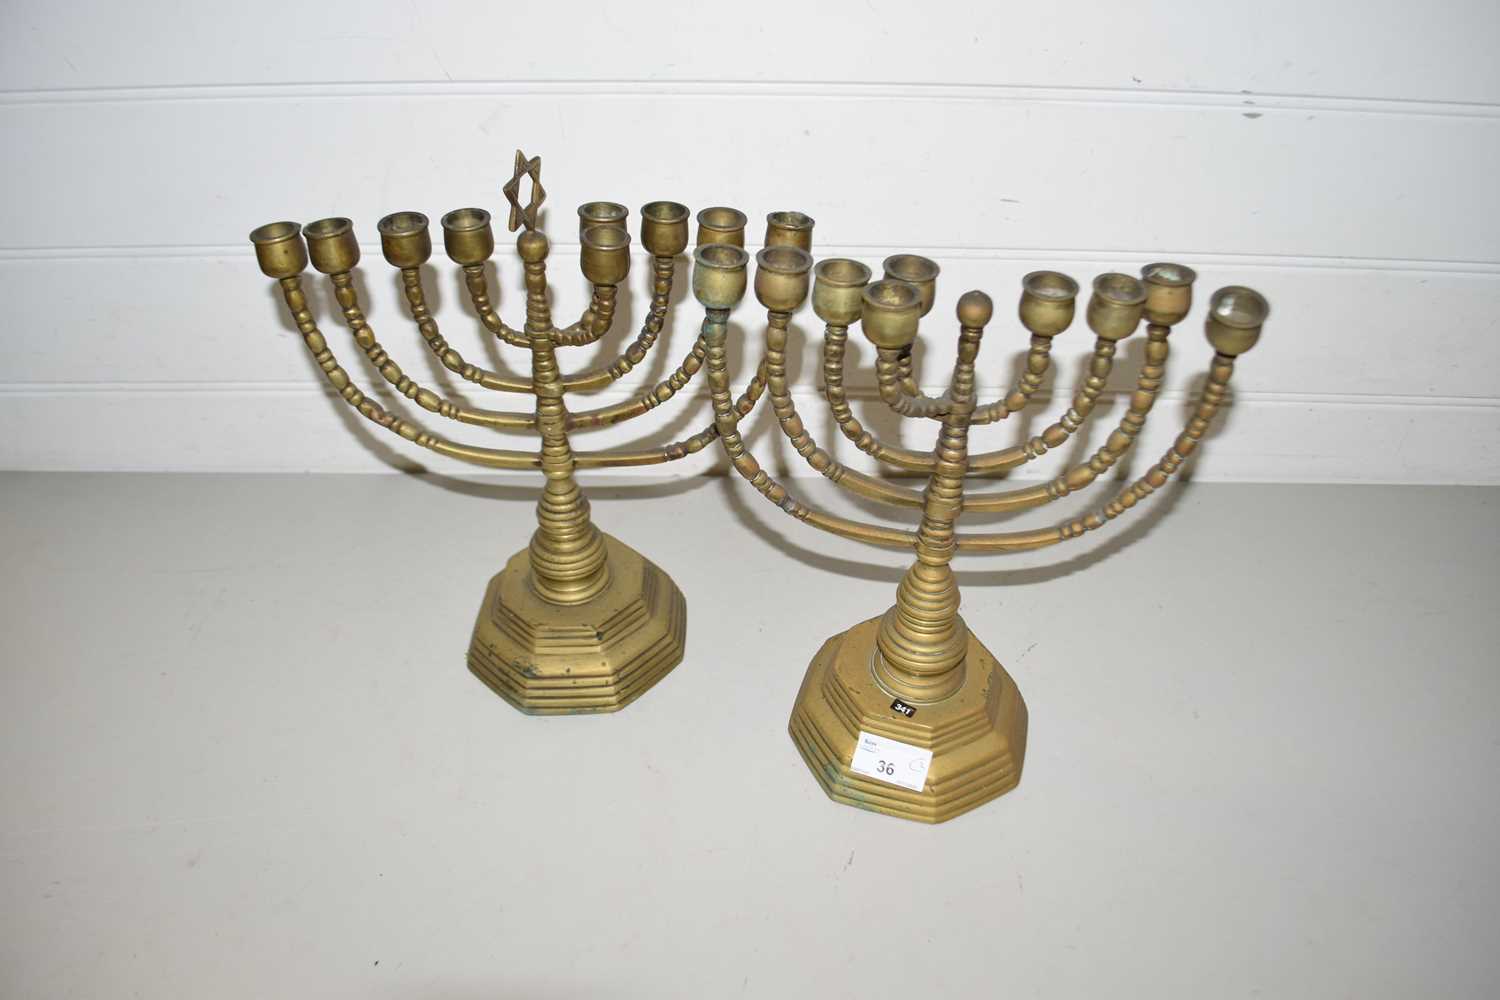 Pair of Jewish Menorah candlesticks